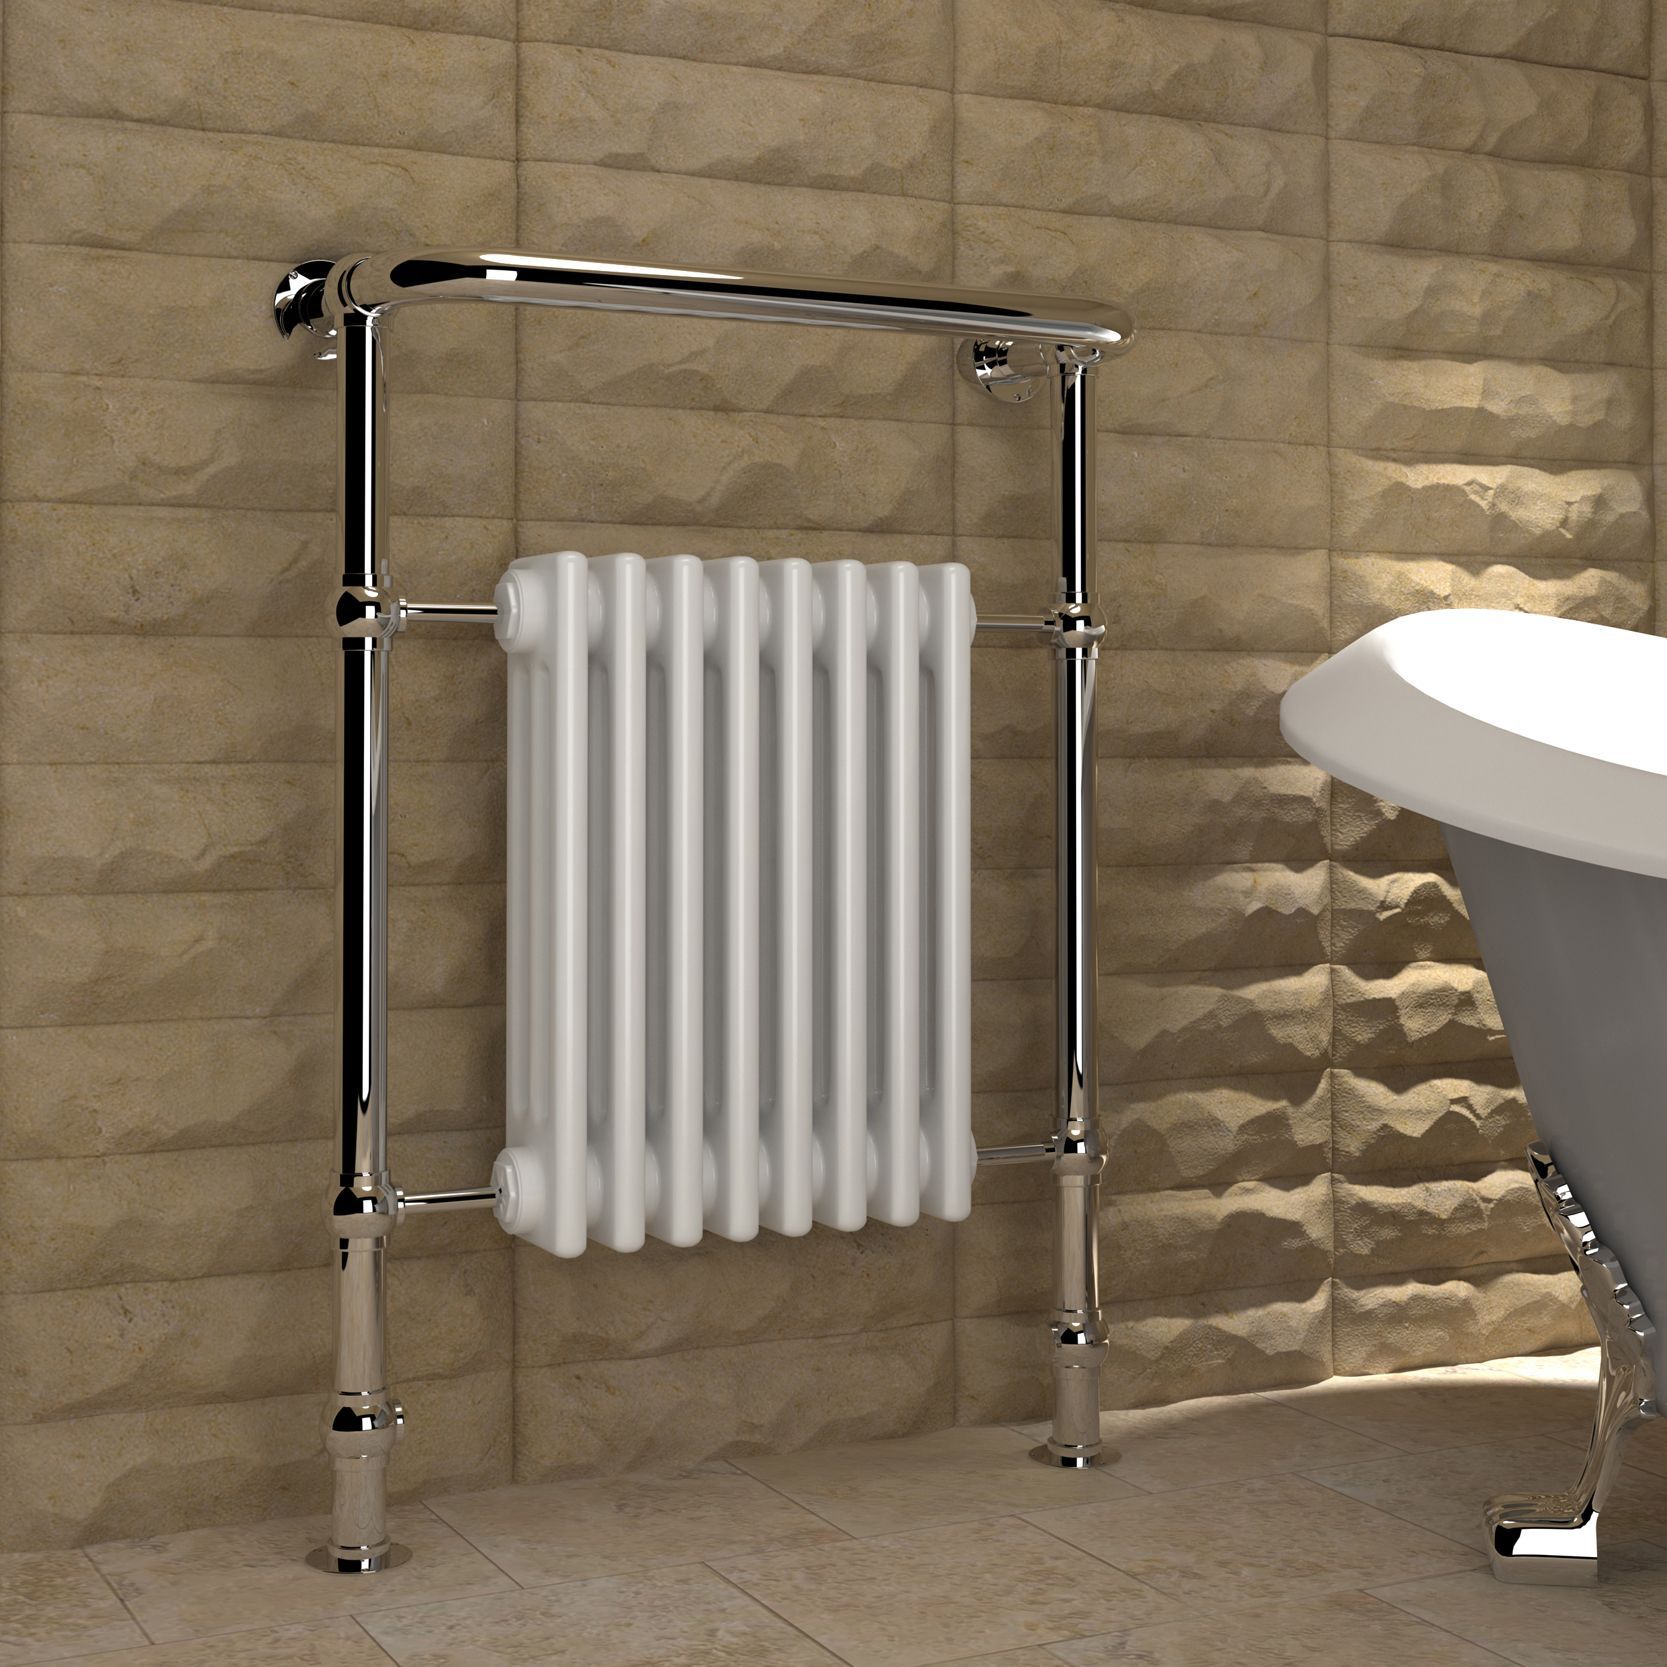 Kudox Victoria 531W White Towel heater (H)952mm (W)675mm